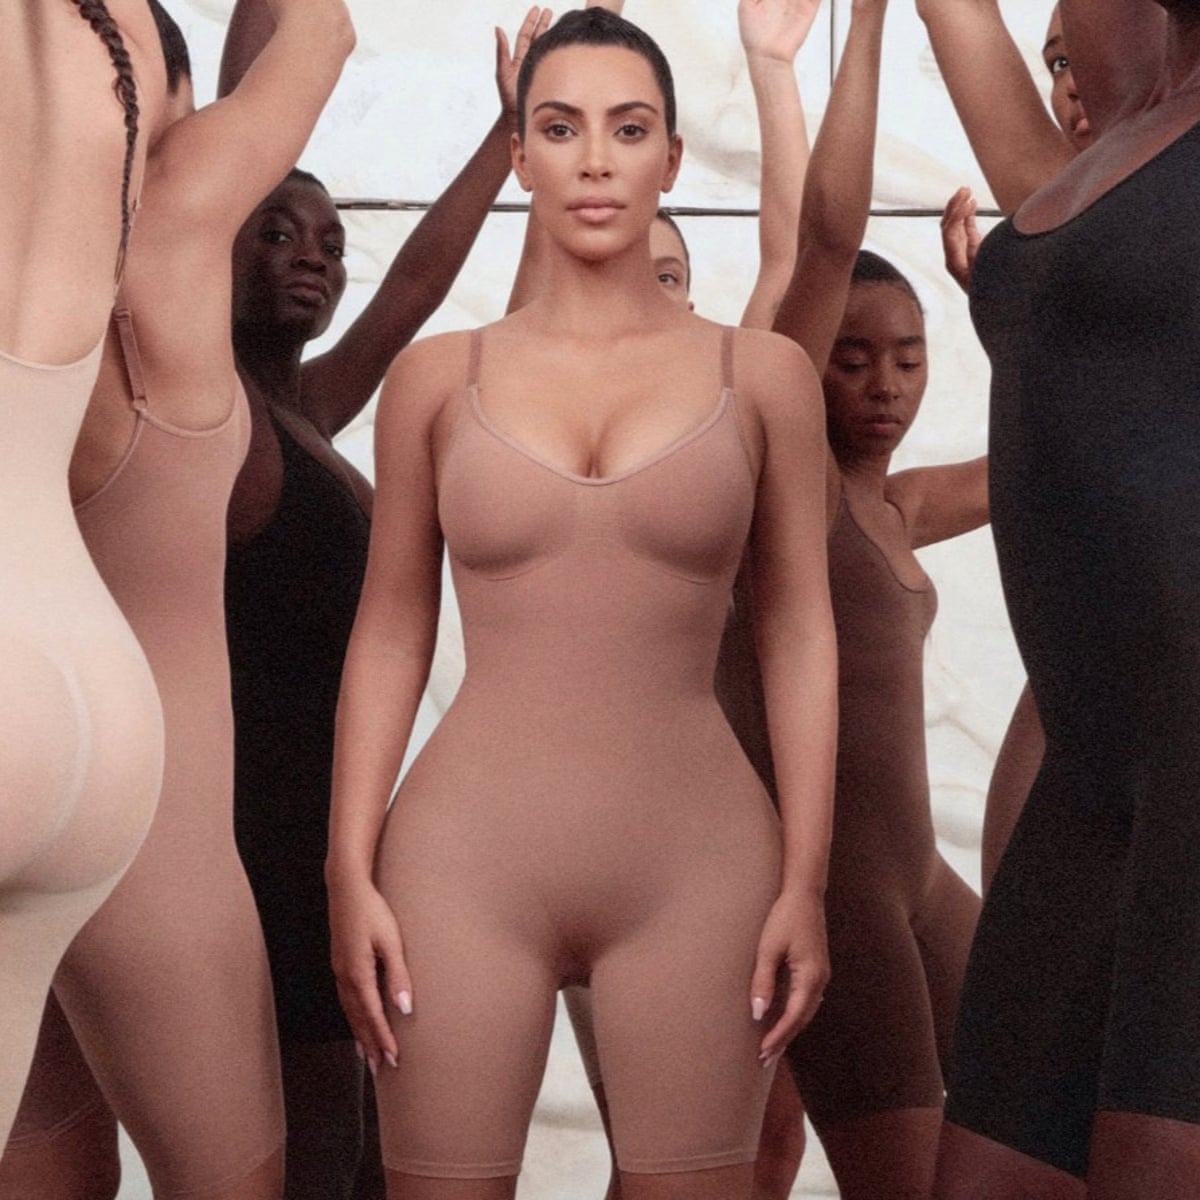 Forget the rebrand – Kim Kardashian West should ditch her